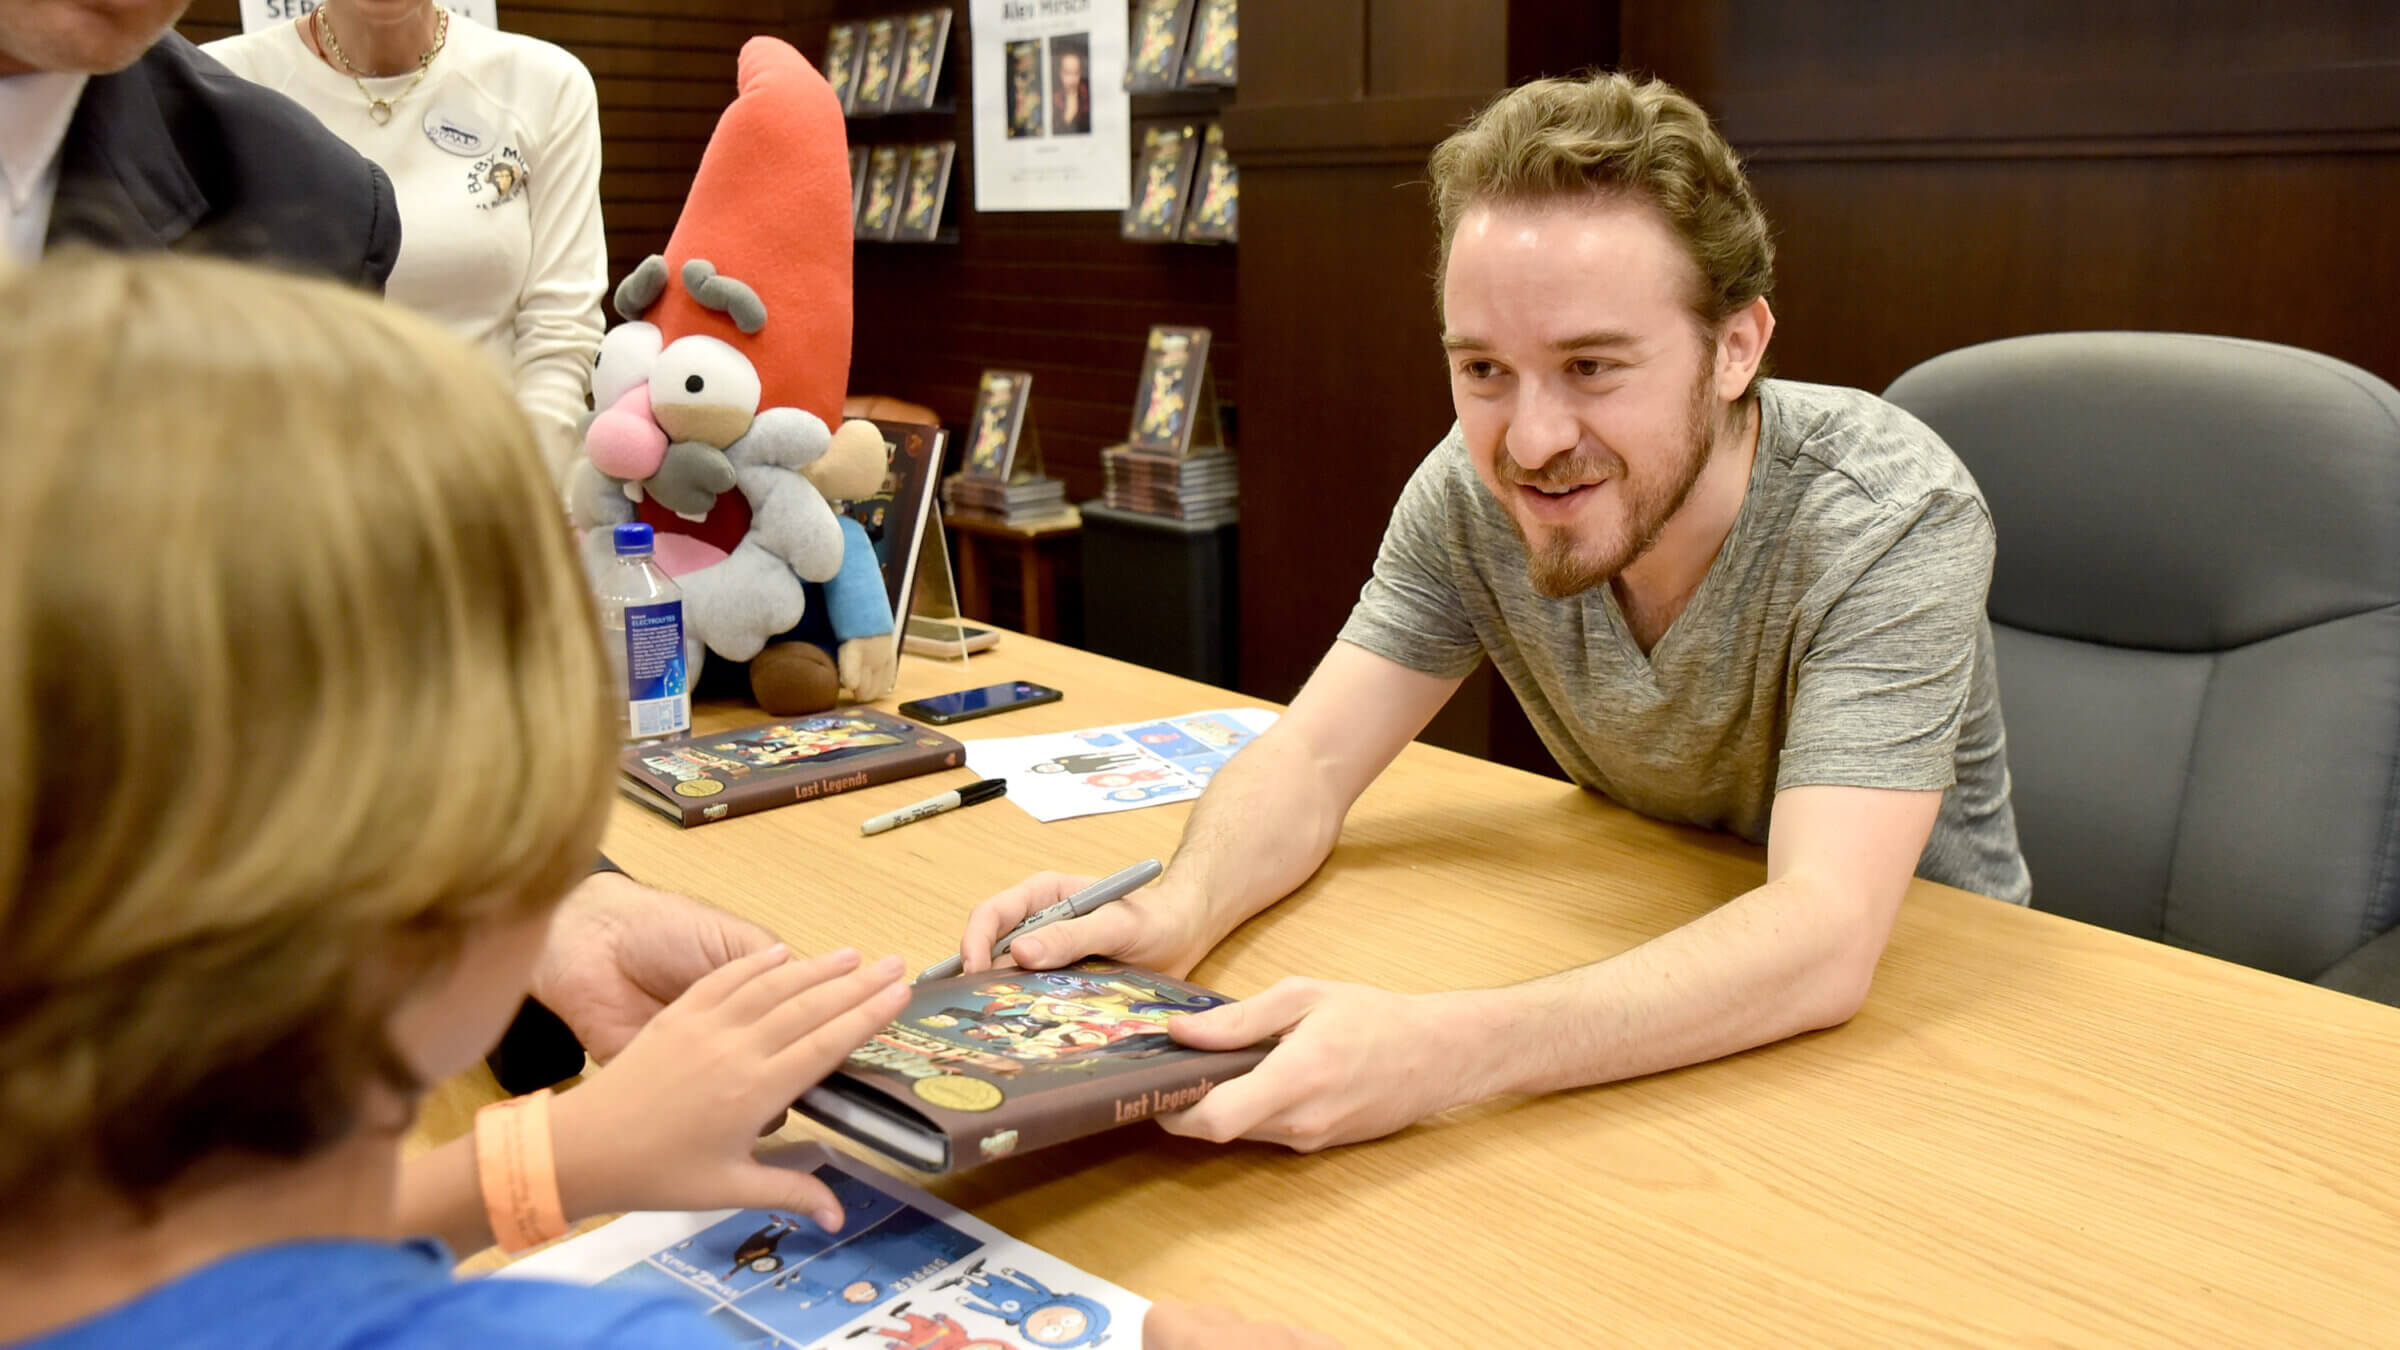 “Gravity Falls” creator Alex Hirsch signs copies of his book, “Gravity Falls: Lost Legends” in 2018.